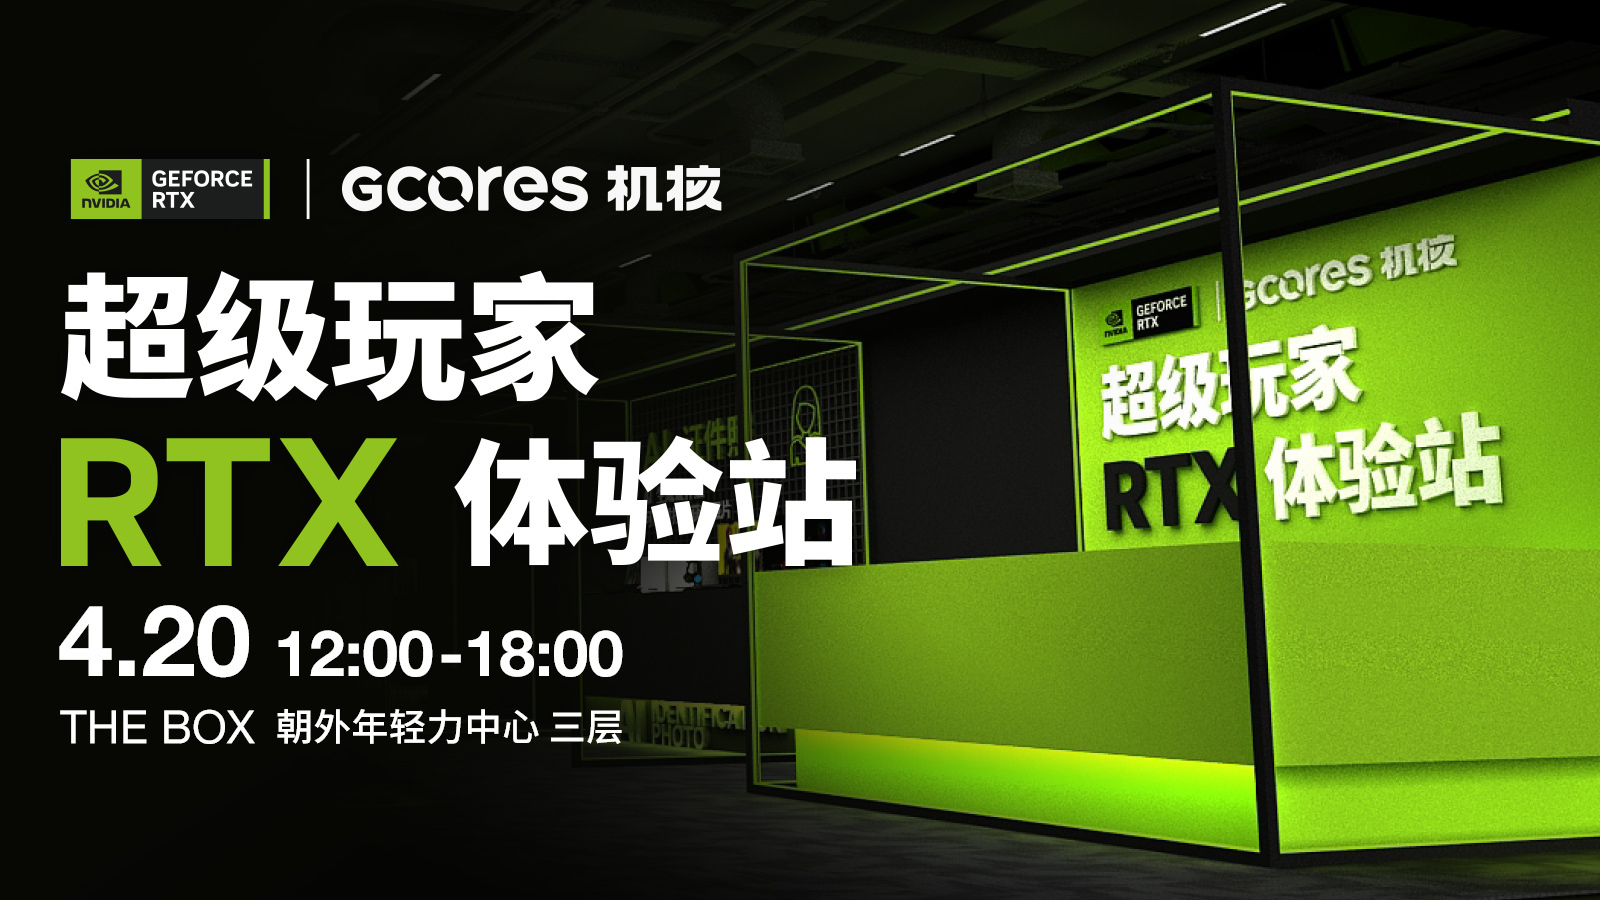 GeForce x GCORES 超級玩家 RTX 體驗站 招募開啟！｜北京活動